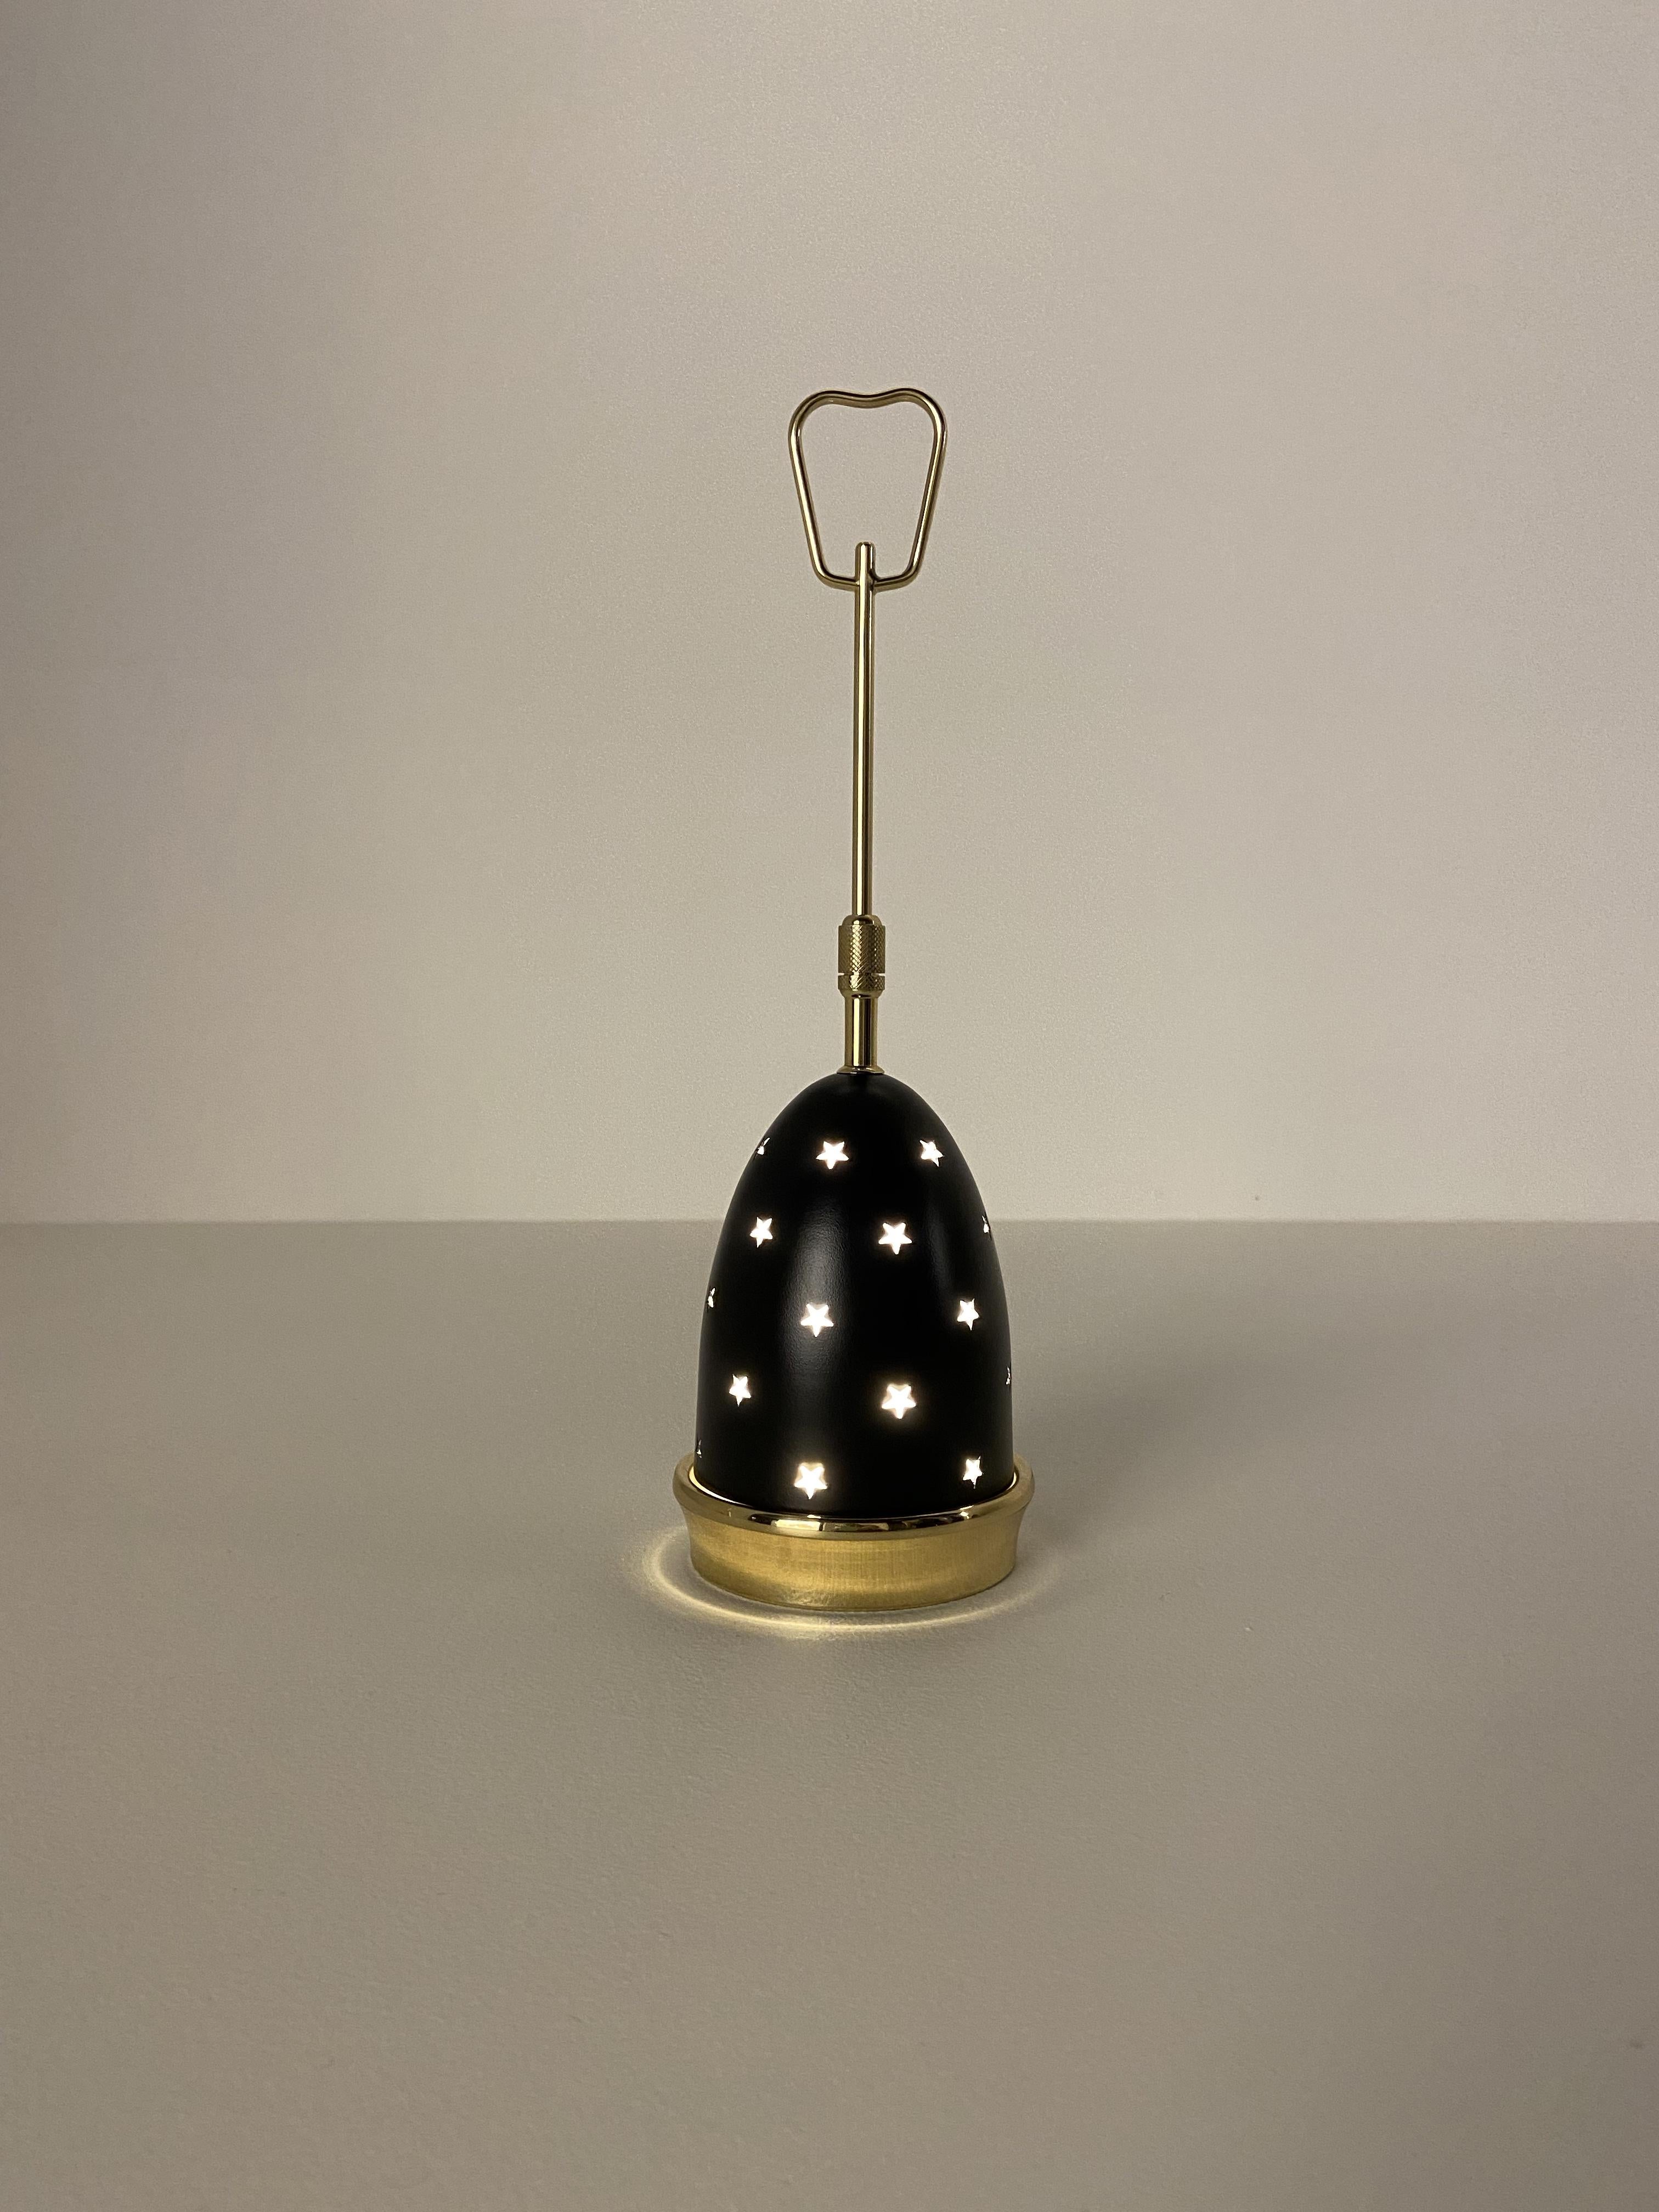 Mid-Century Modern 21st Century Black Stellina Table Lamp Angelo Lelii 2019 Style of 1950s Italy